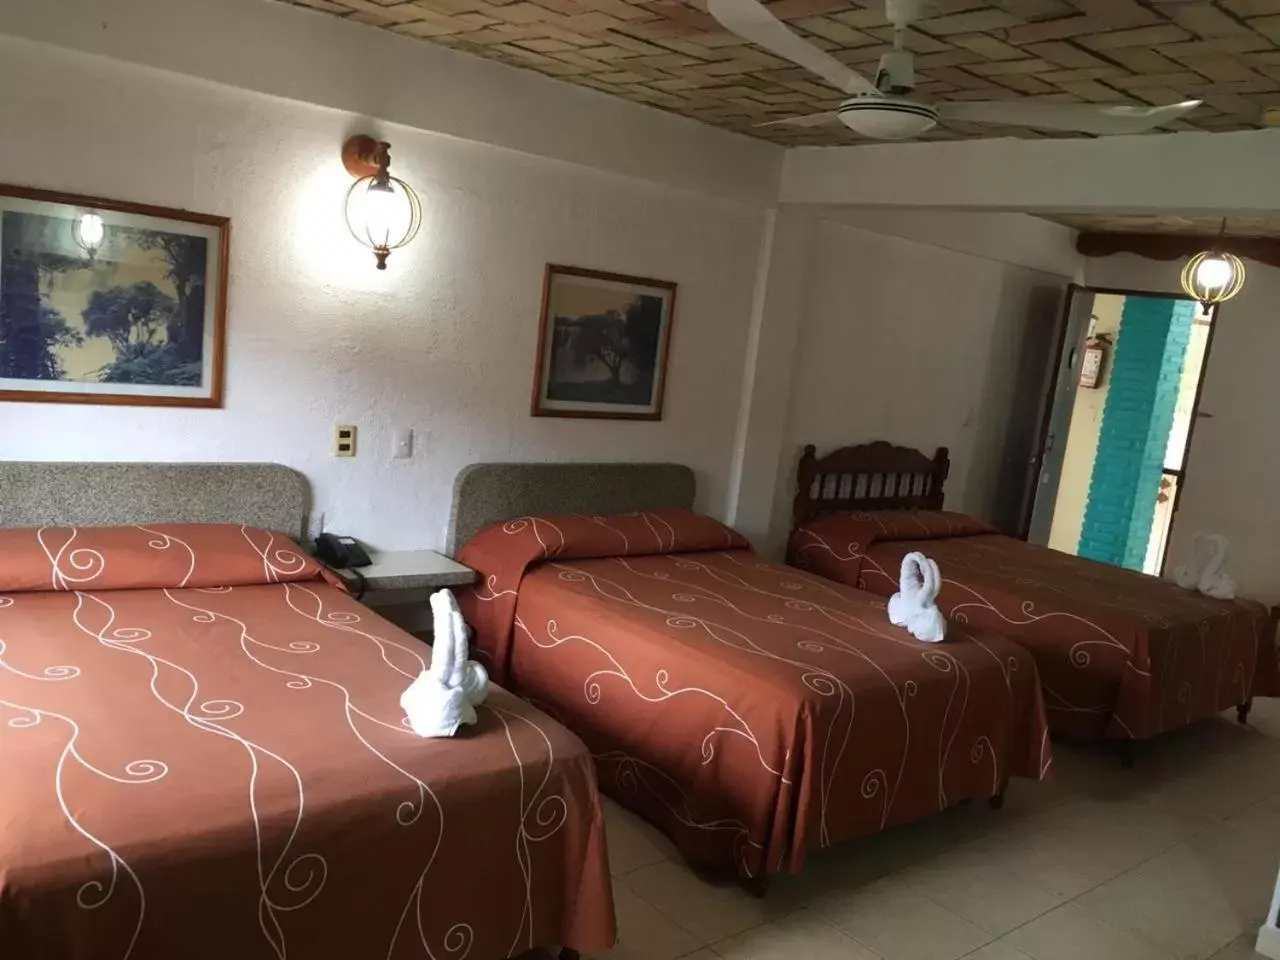 Bedroom, Room Photo in Arcos hotel